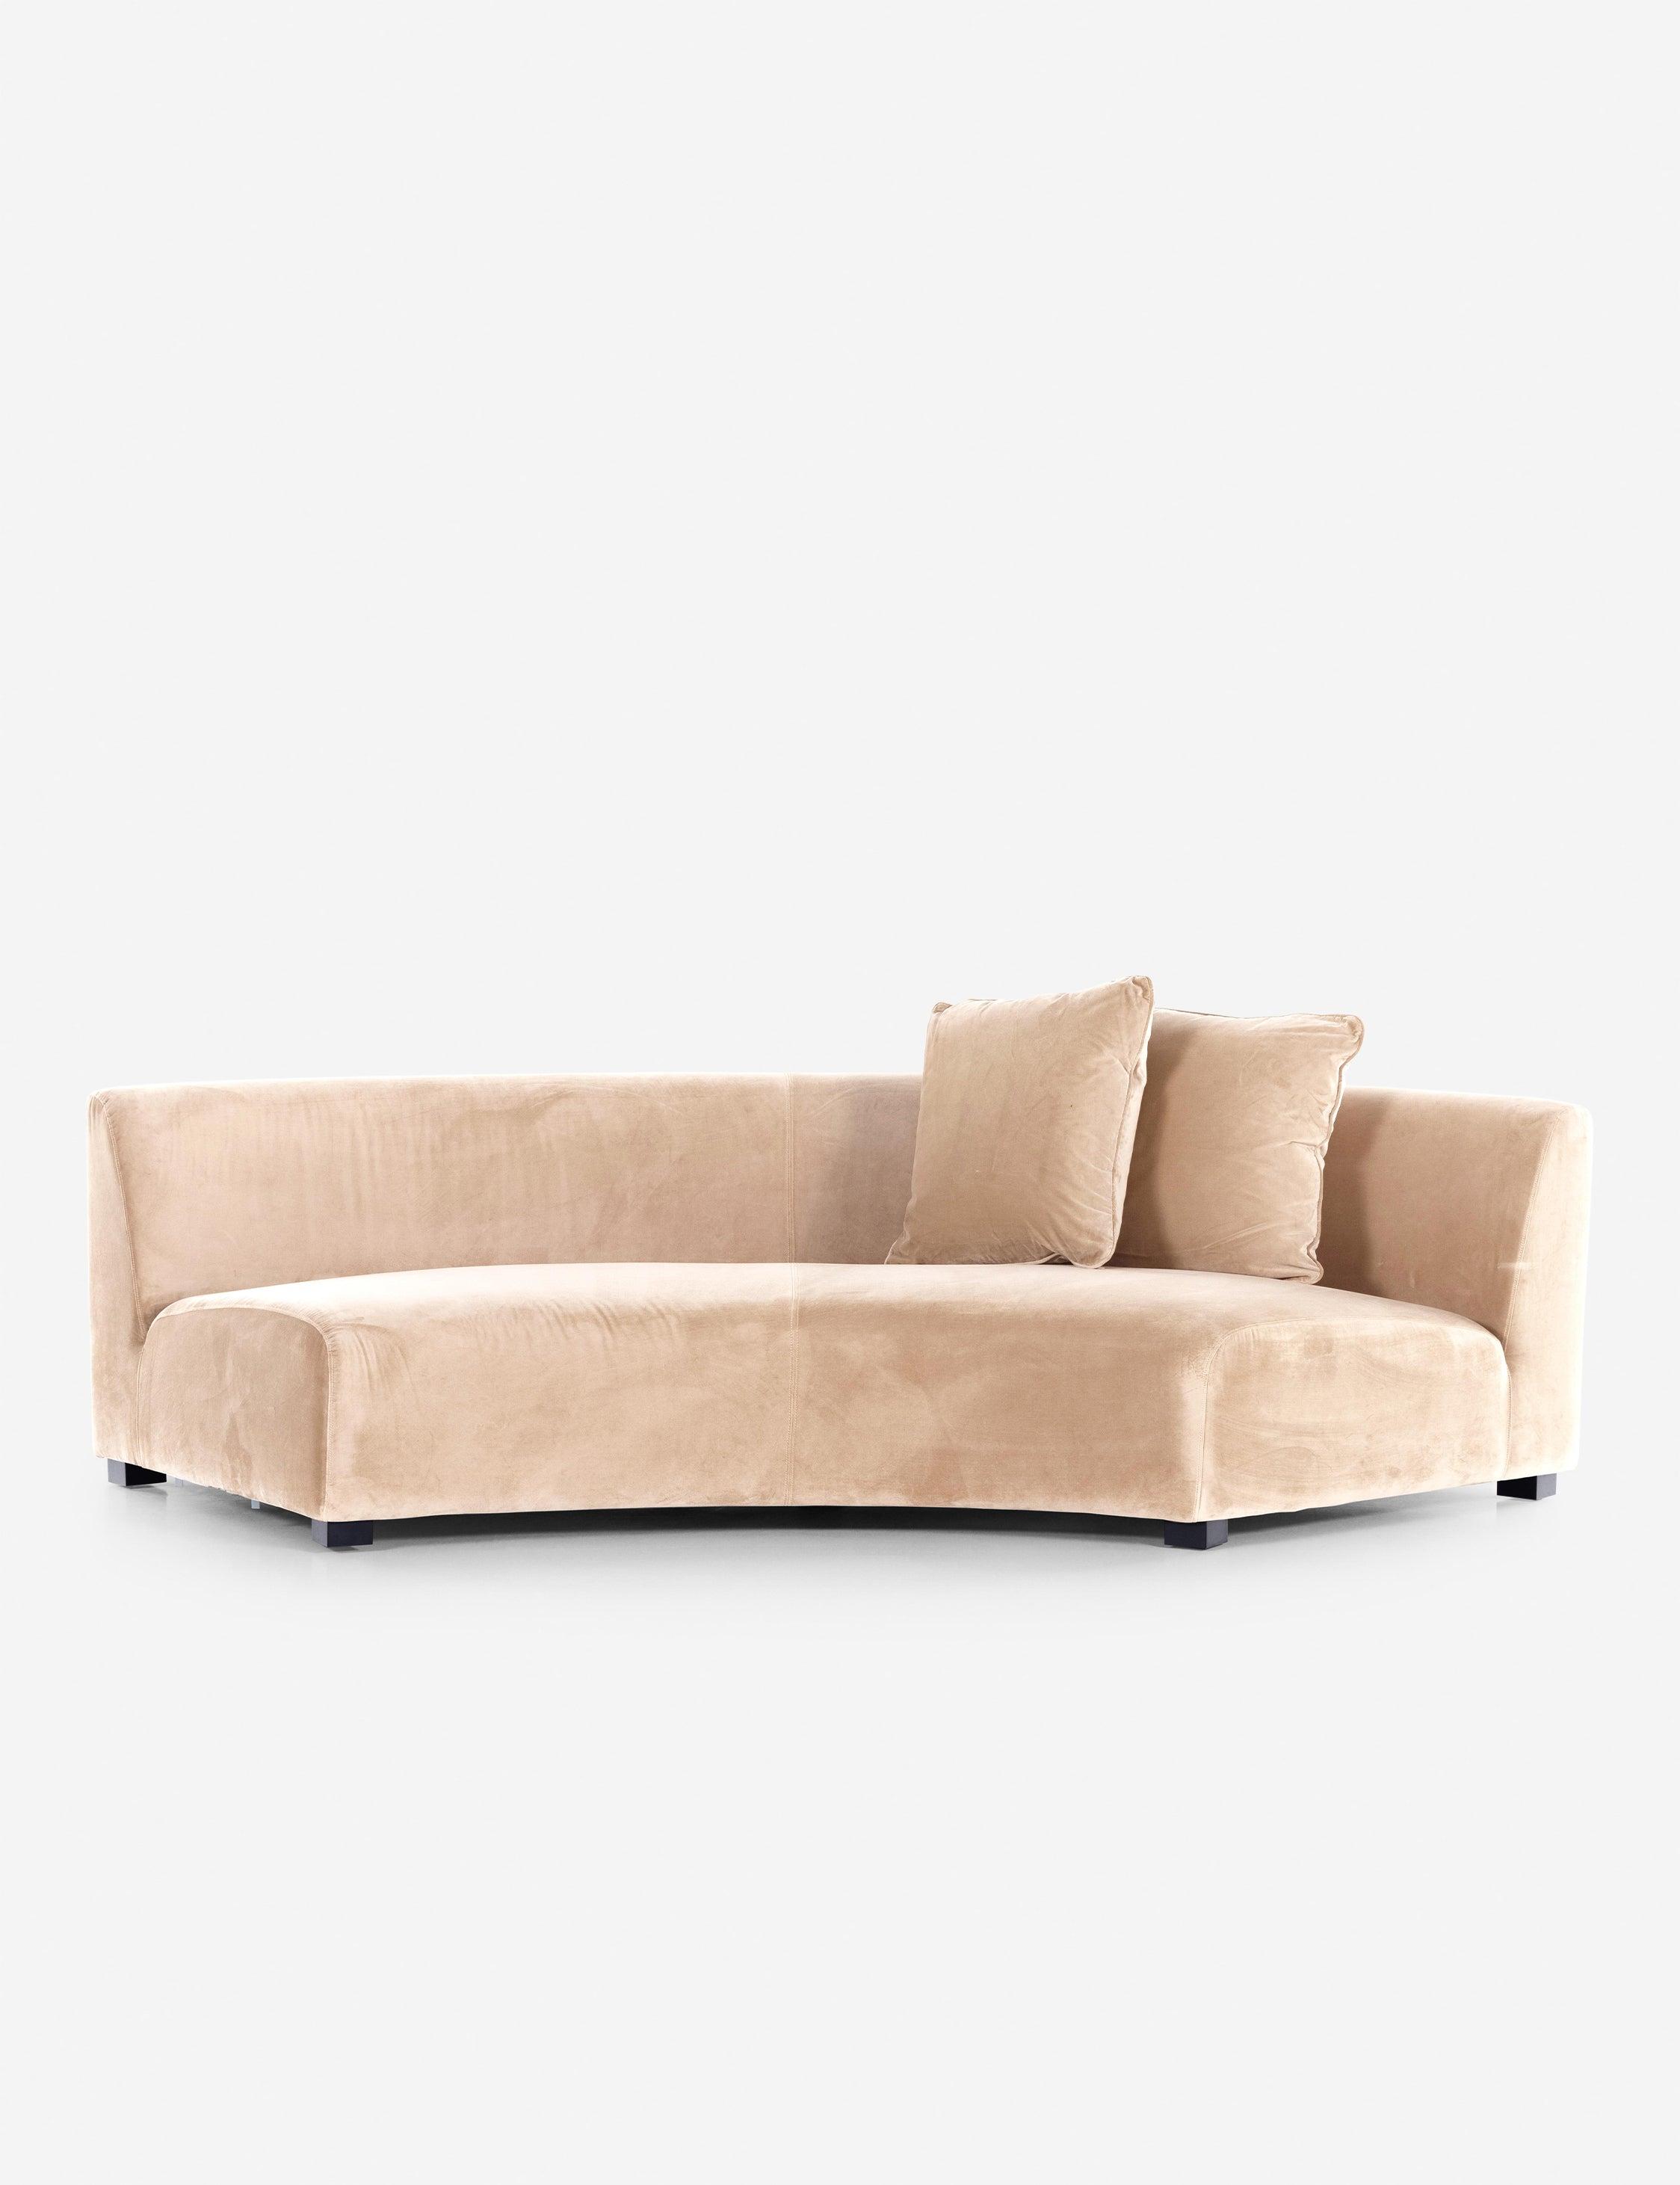 Dover Crescent Cream Linen-Blend 106" Right Arm Facing Sofa